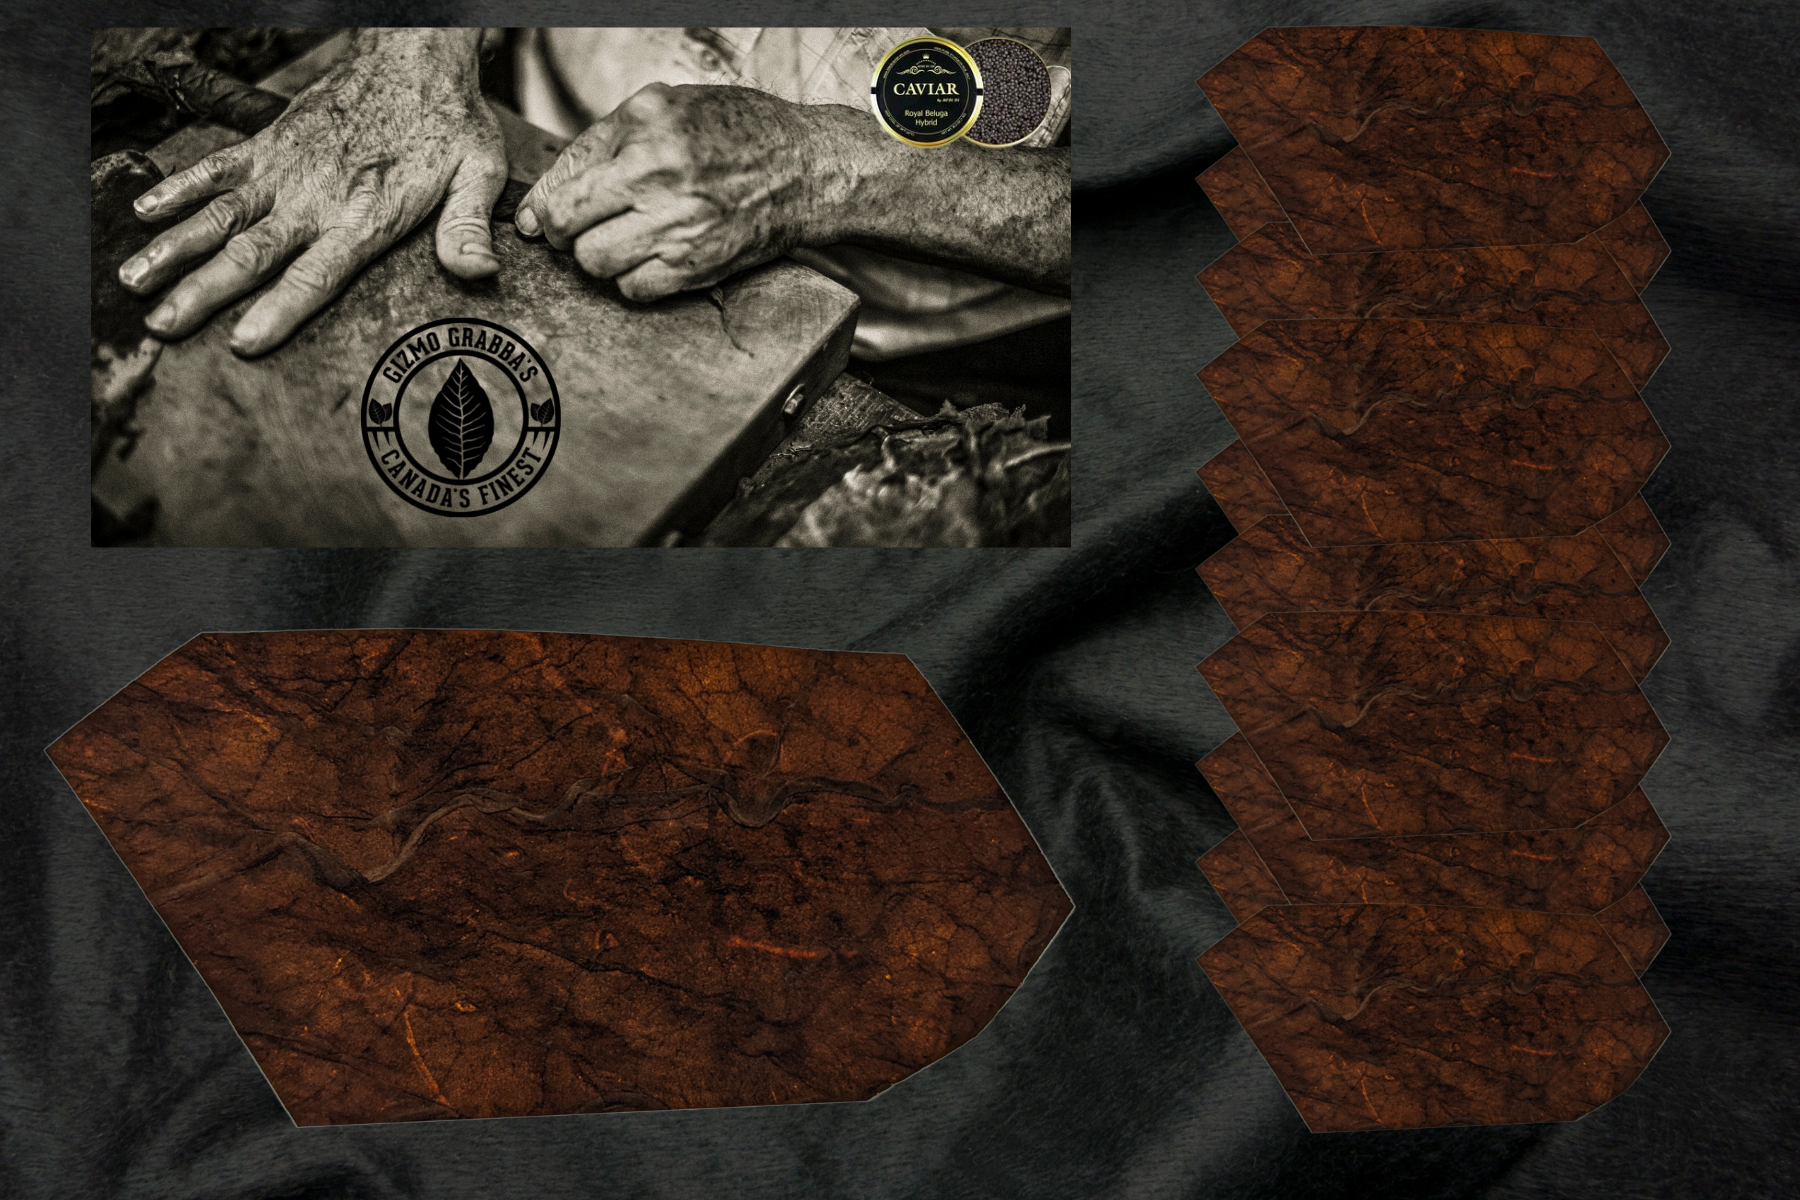 Grabba Leaf Cigar Wrap Pack of 25 – Tobacco Stock